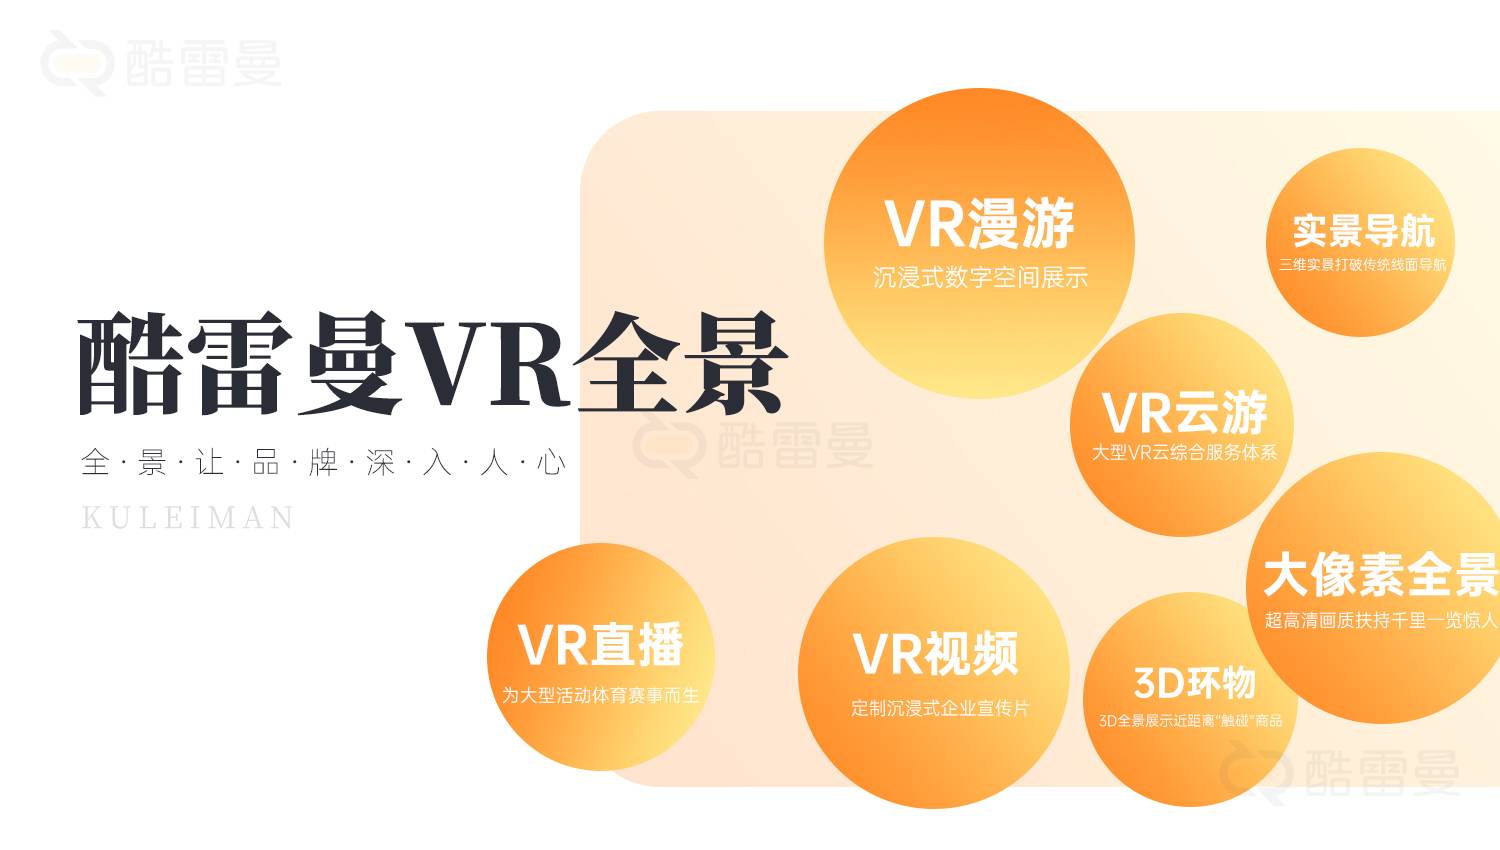 VR全景在旅游中应用有哪些？VR云游的优势是什么？